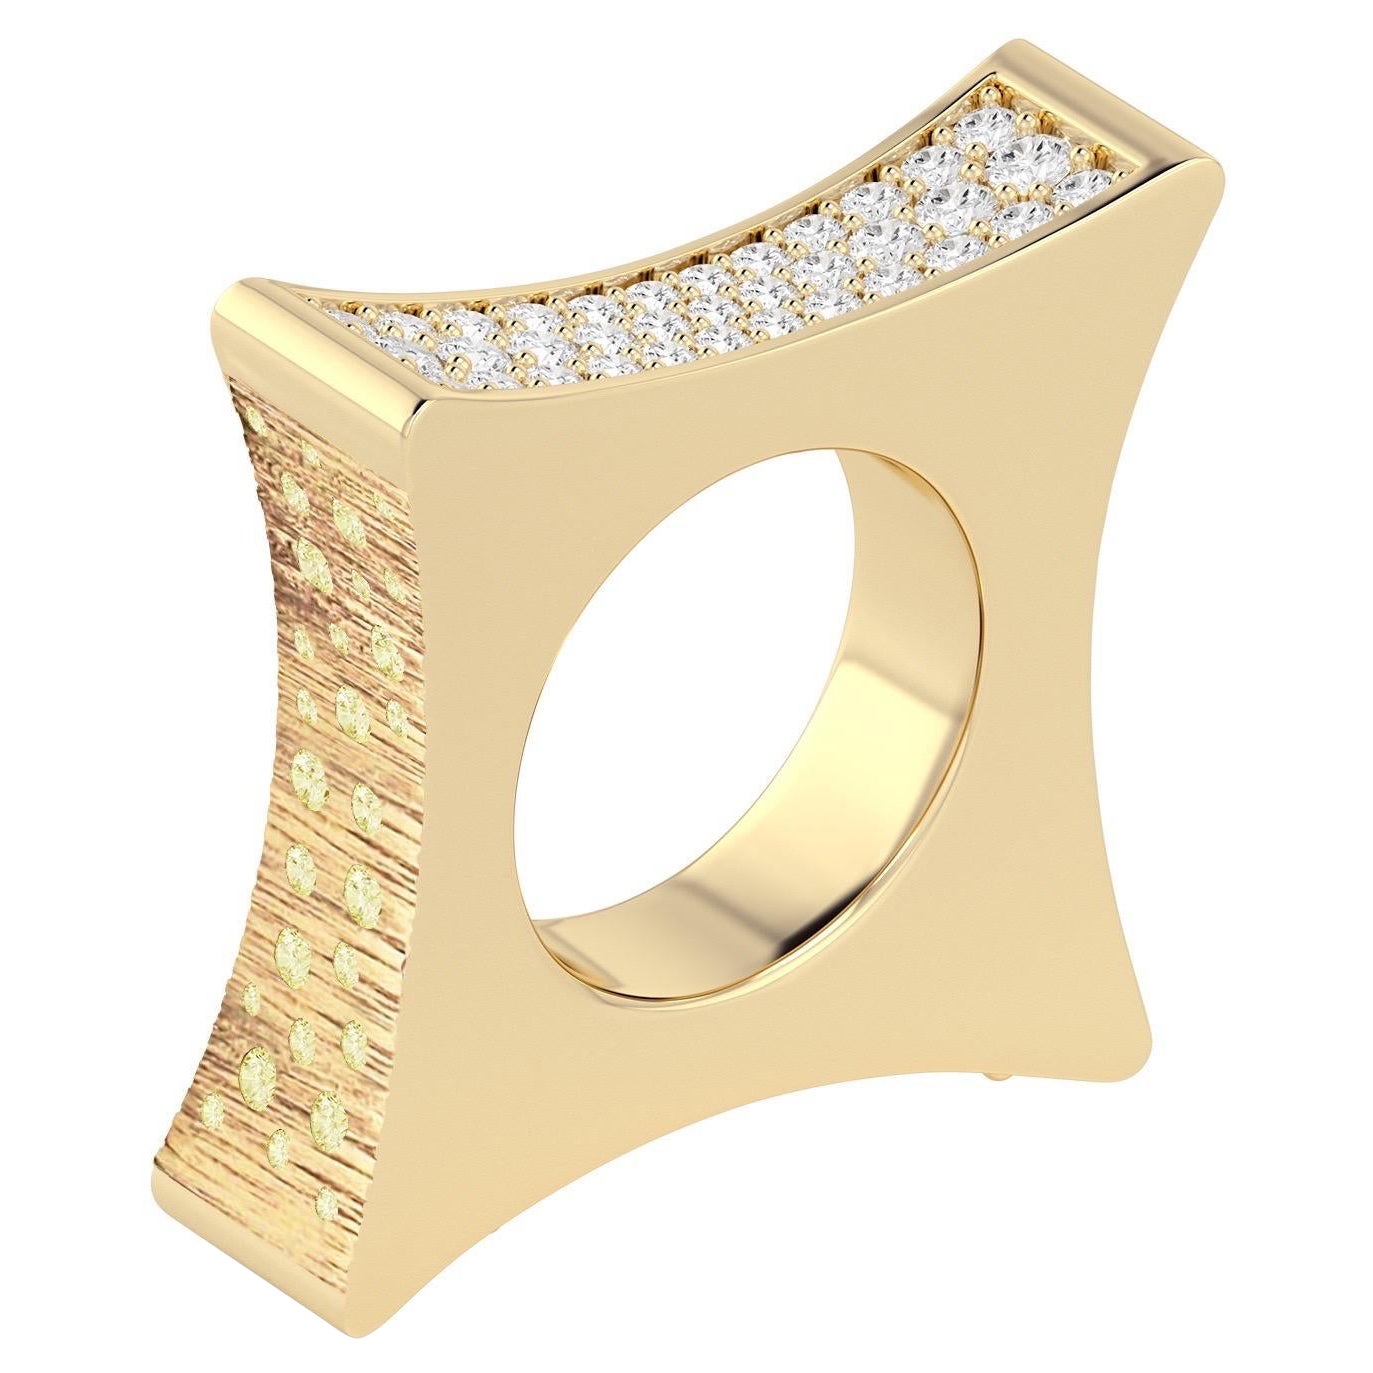 Ruben Manuel “Autumn” Ring.  18K YG, VS white diamonds, Autumn colored diamonds. For Sale